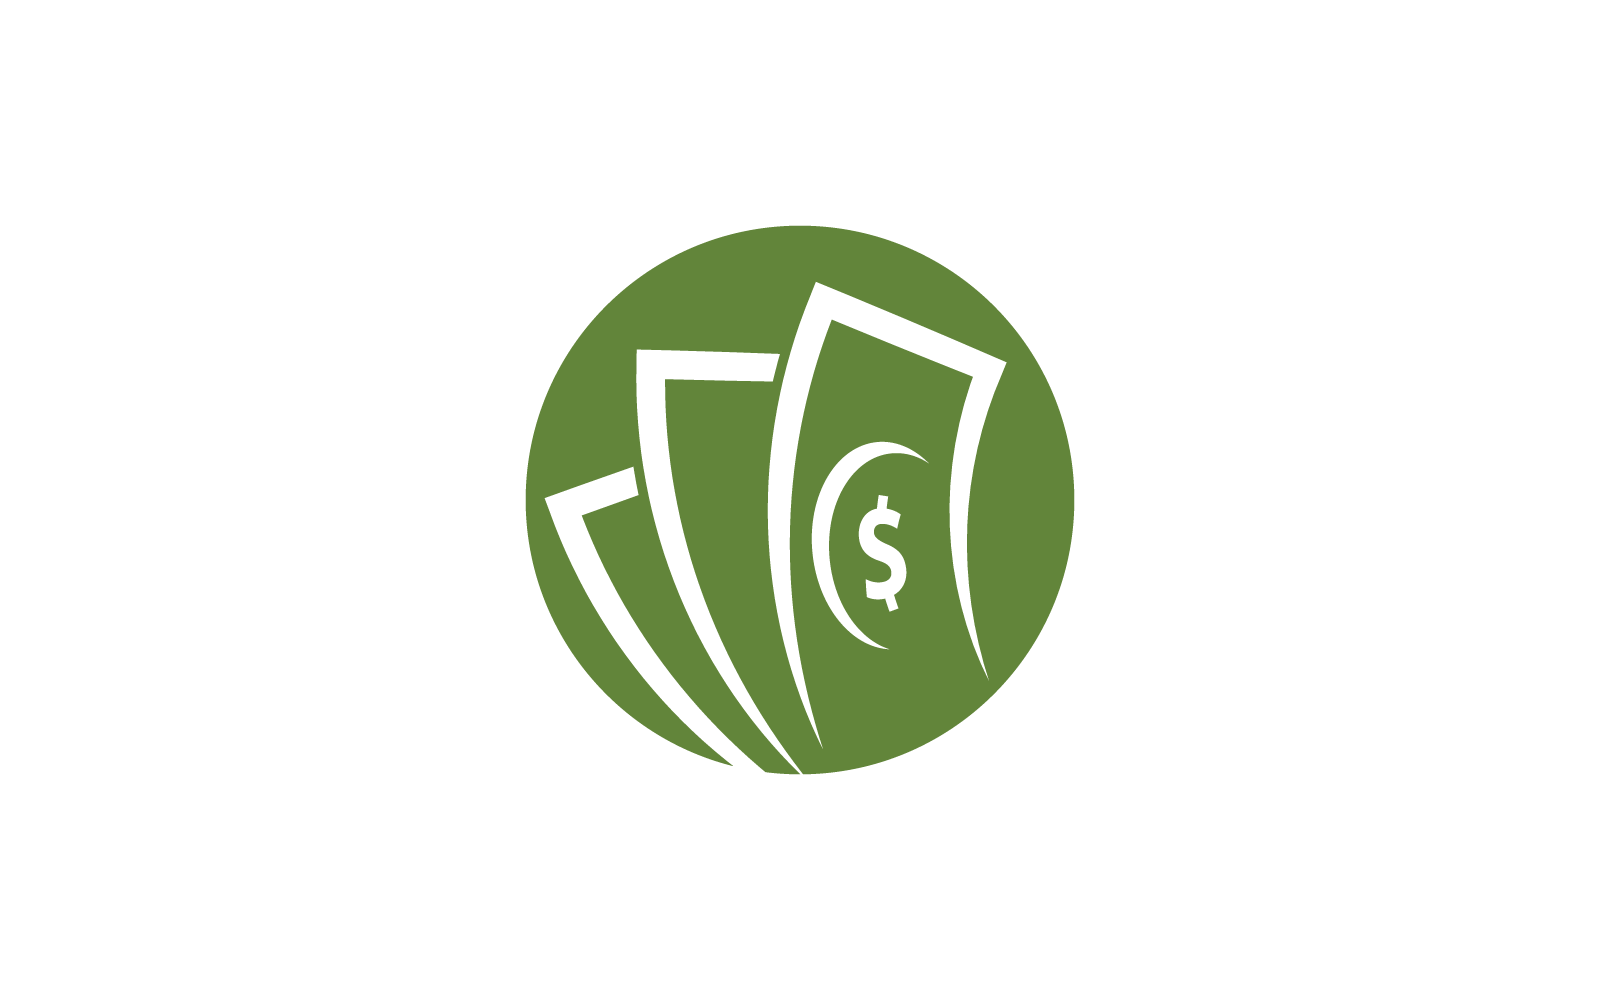 Money dollar illustration vector logo icon flat design